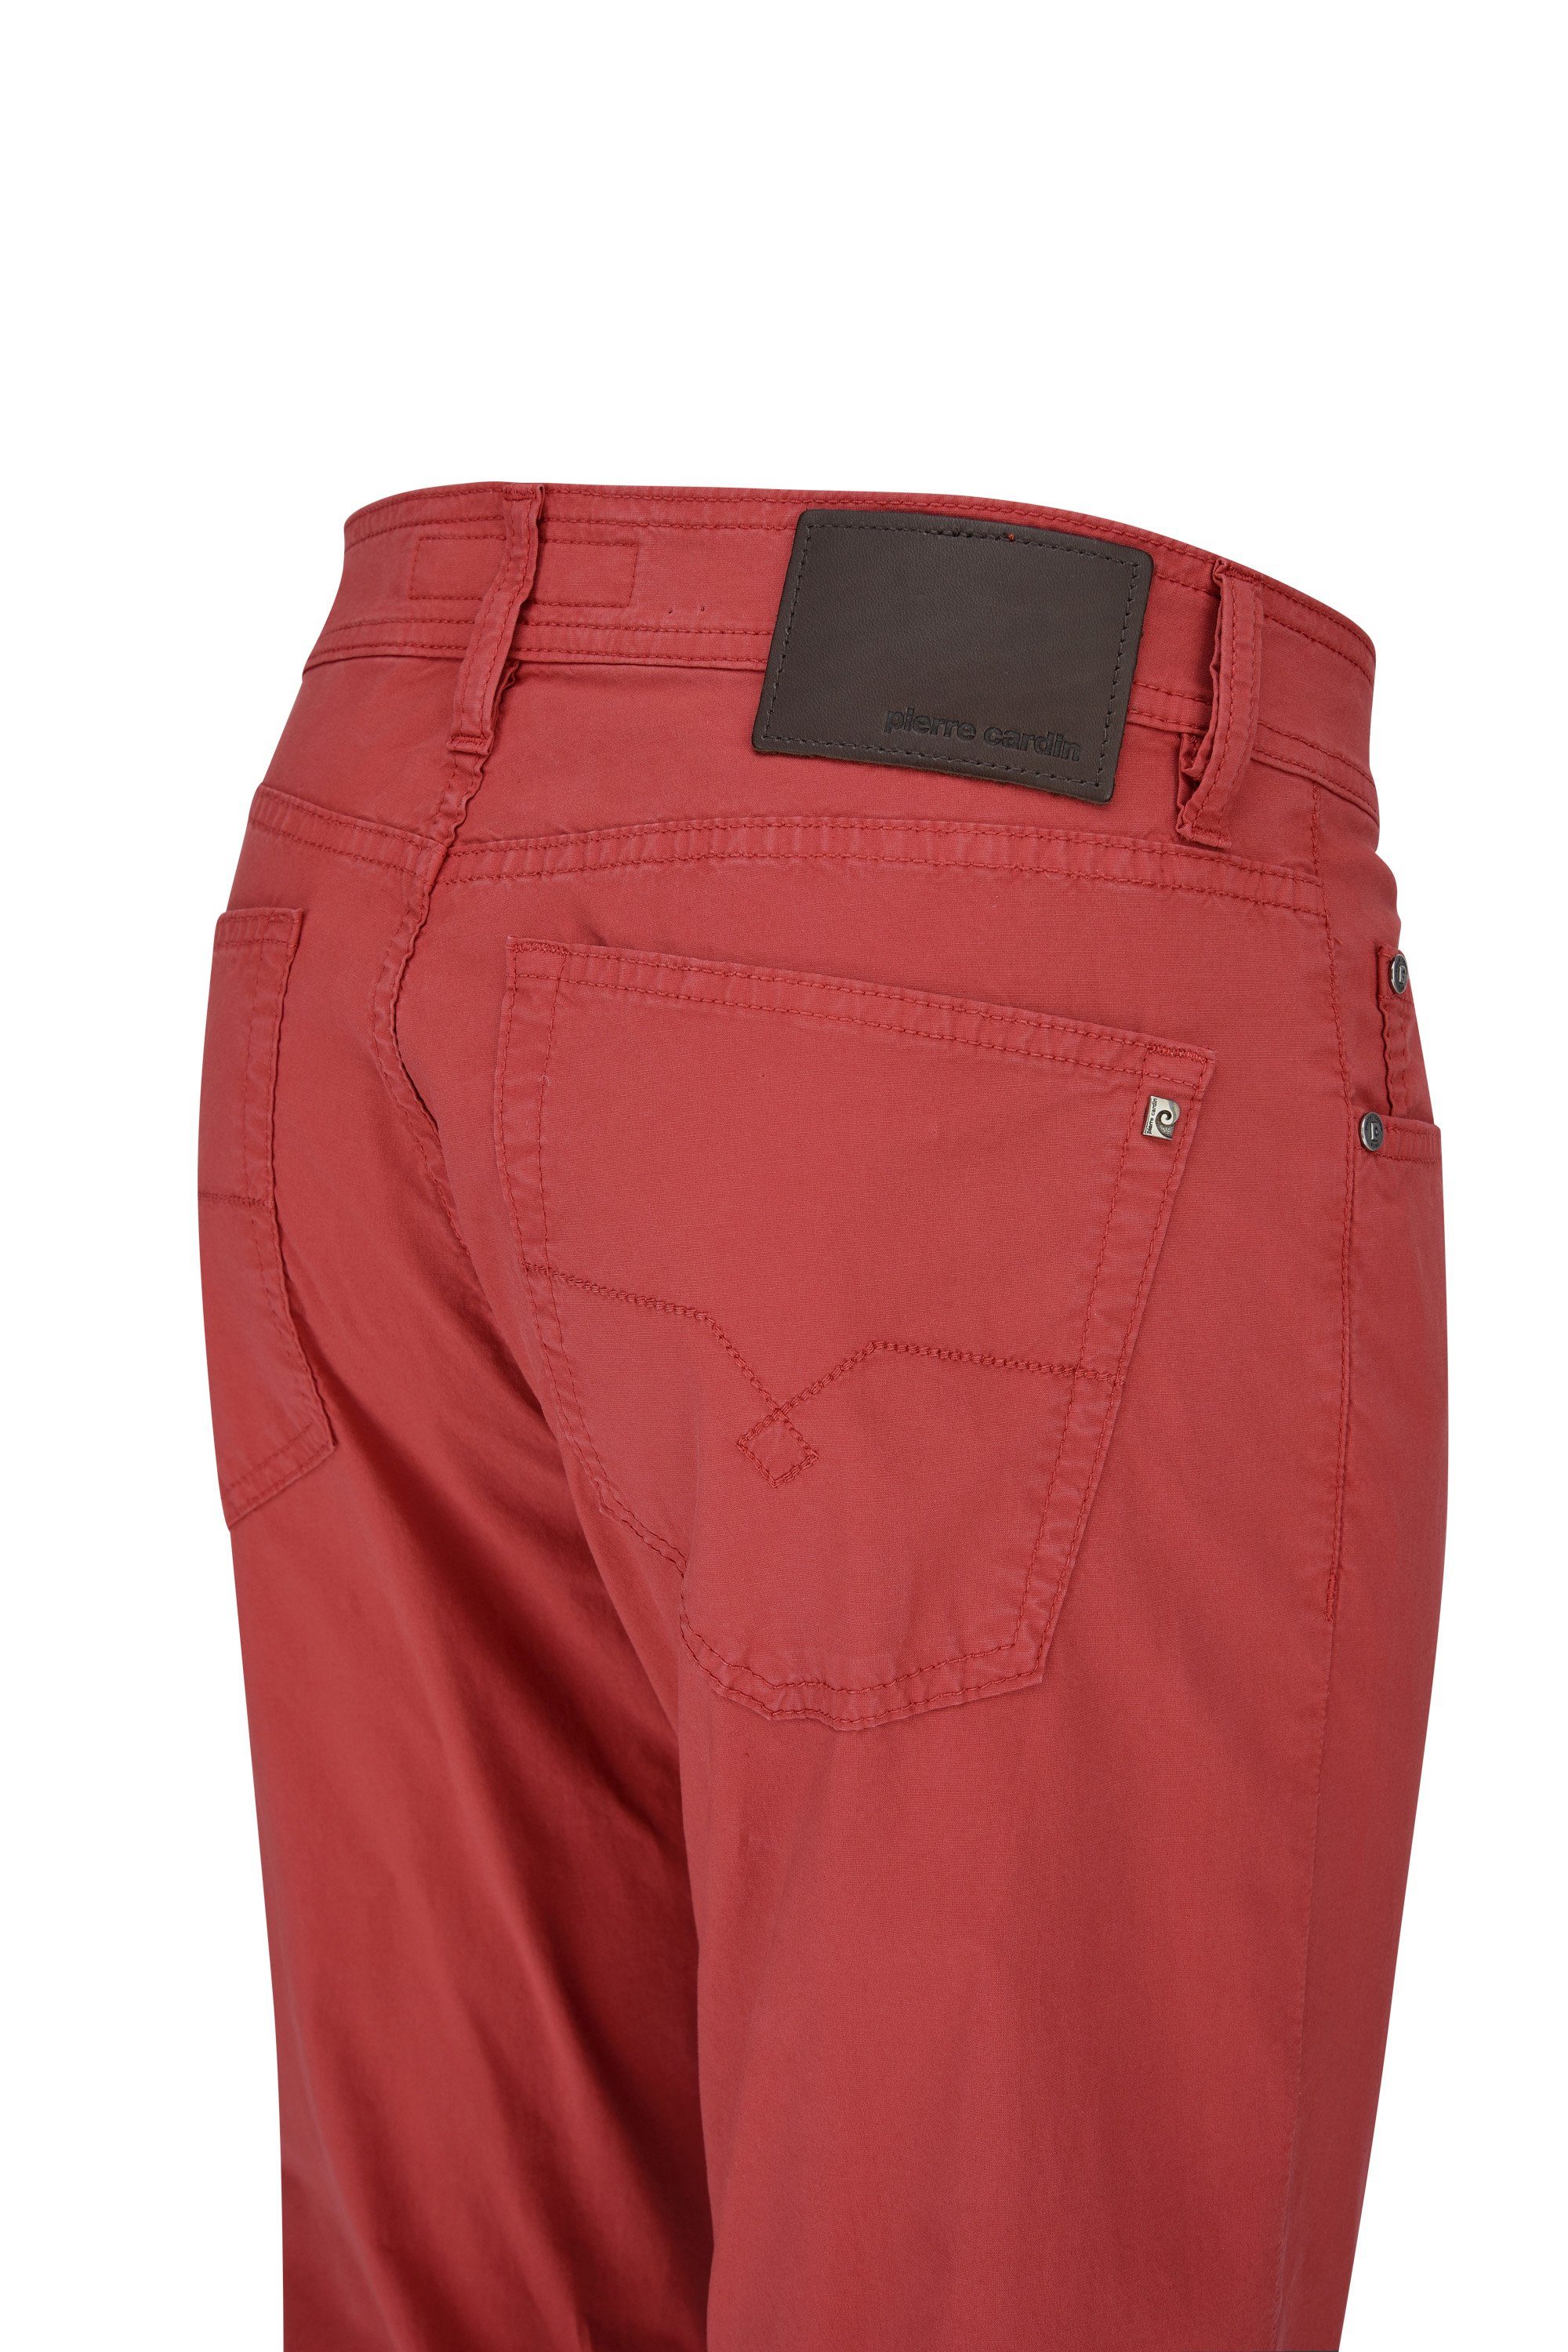 5-Pocket-Jeans Pierre summer 3196 touch rusty DEAUVILLE Cardin 444.91 red CARDIN PIERRE air